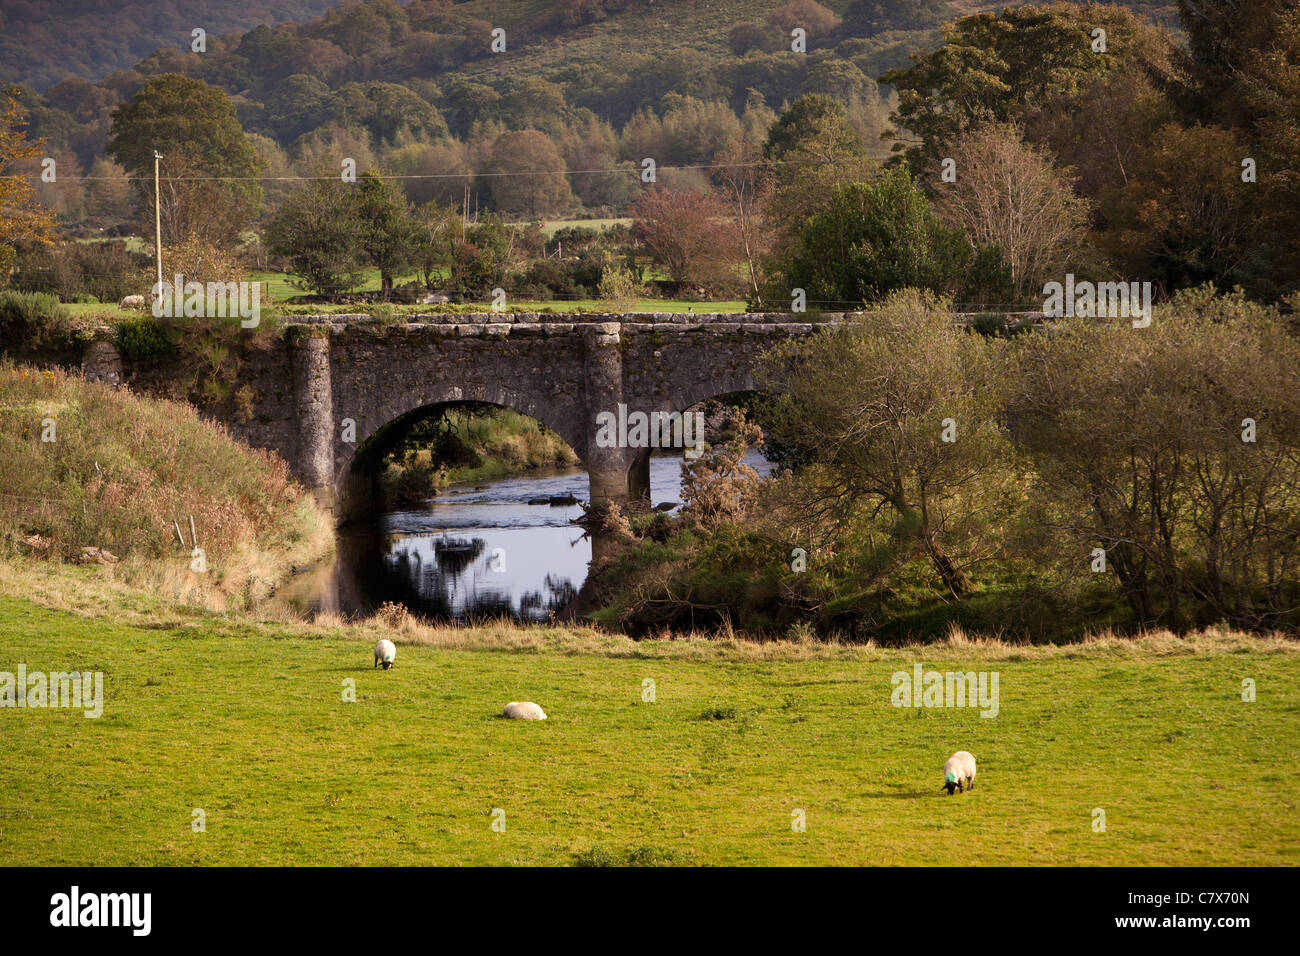 Ireland, Co Wicklow, Glenmalure, Drumgoff, sheep grazing by Avonbeg River bridge Stock Photo